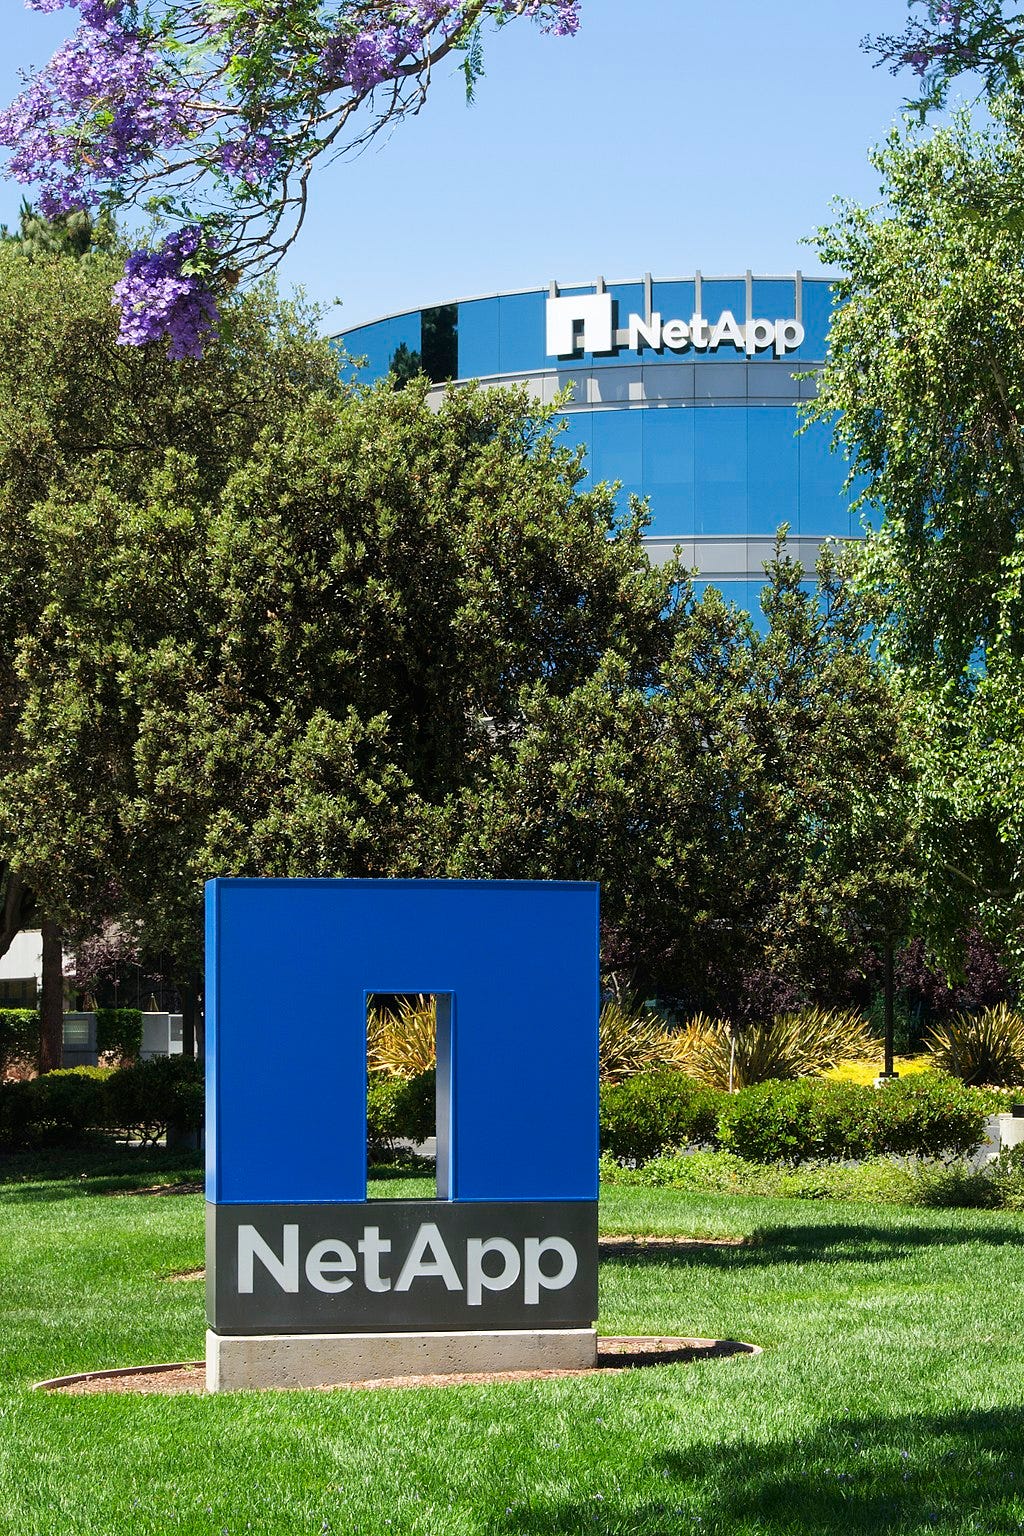 NetApp Q1 Performance Beats Expectations, Issues Upbeat Q2 Outlook